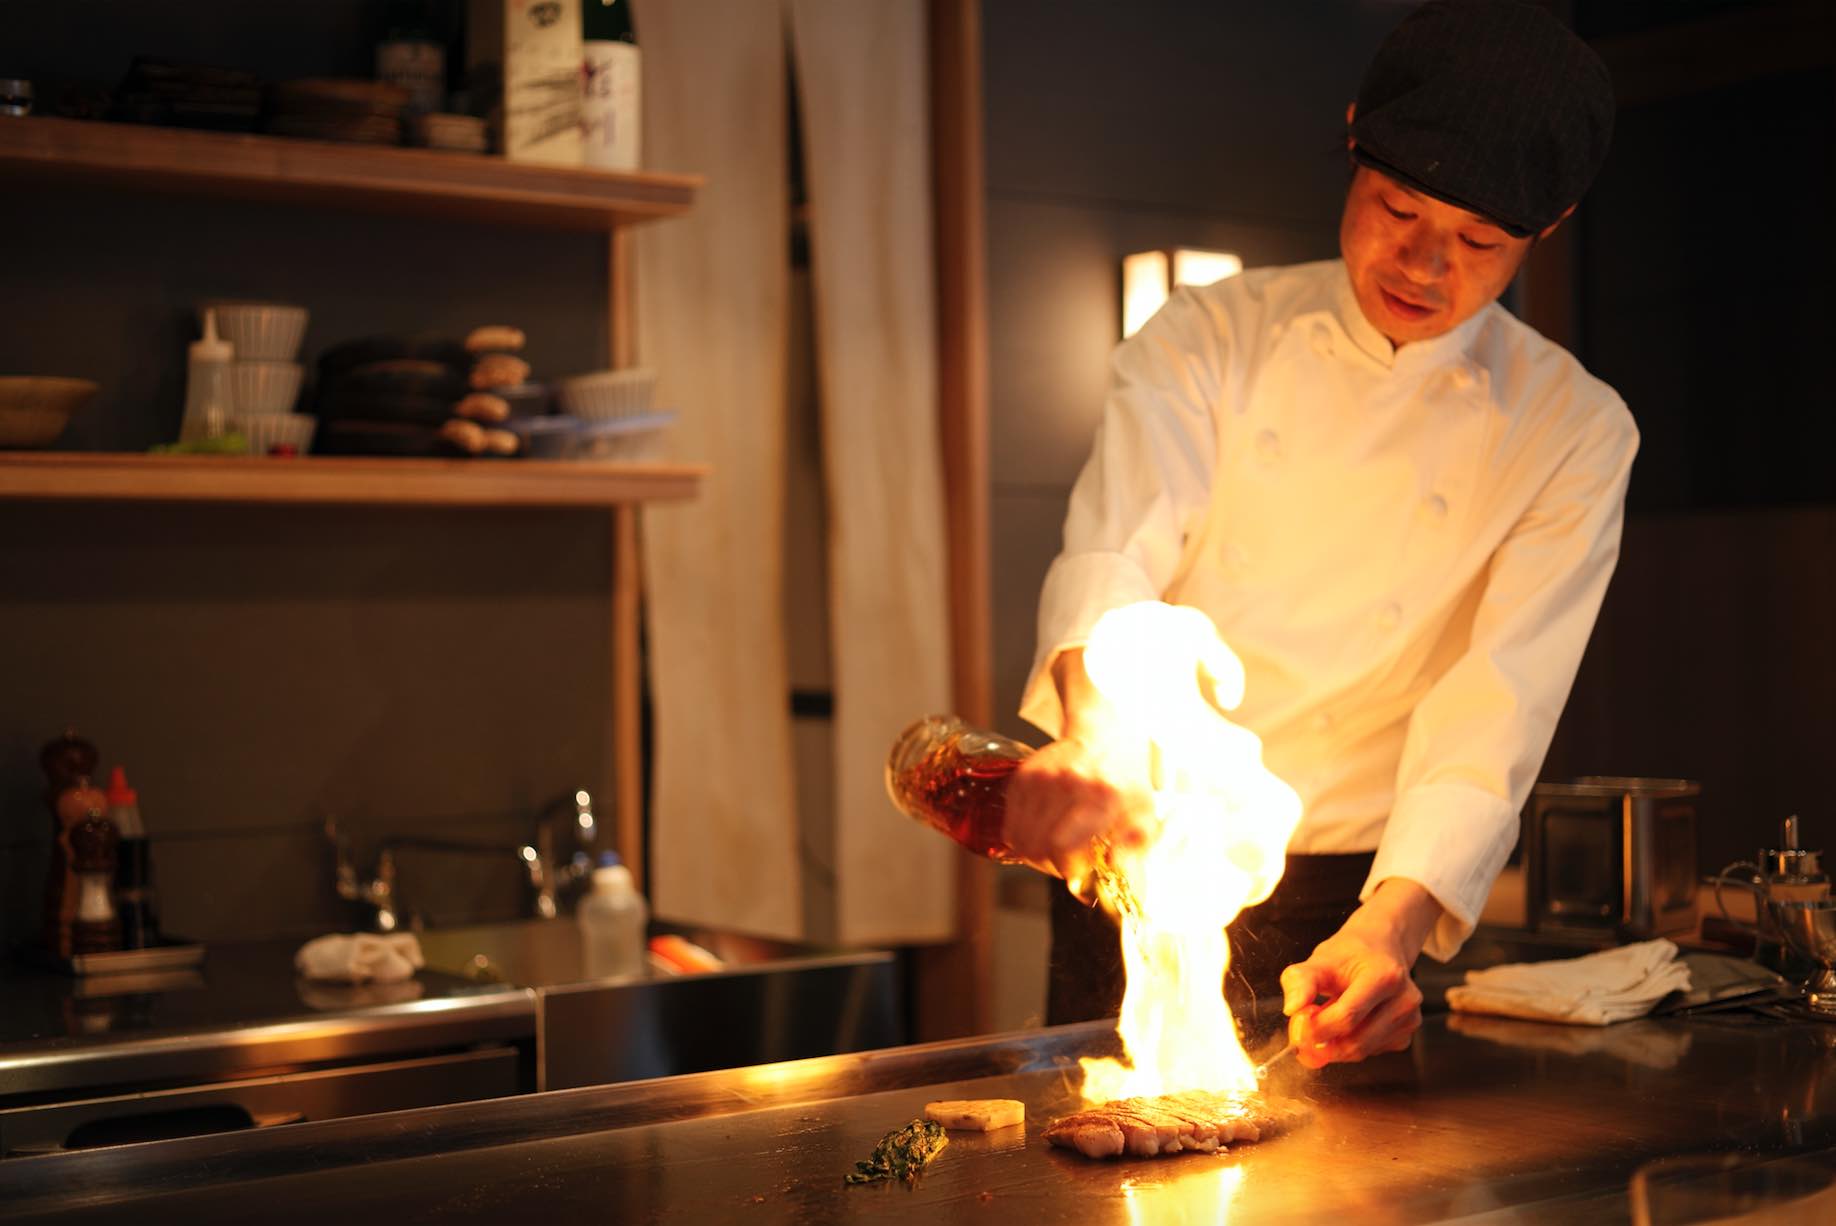 Osaka Kitchen Chef In Action - AspirantSG